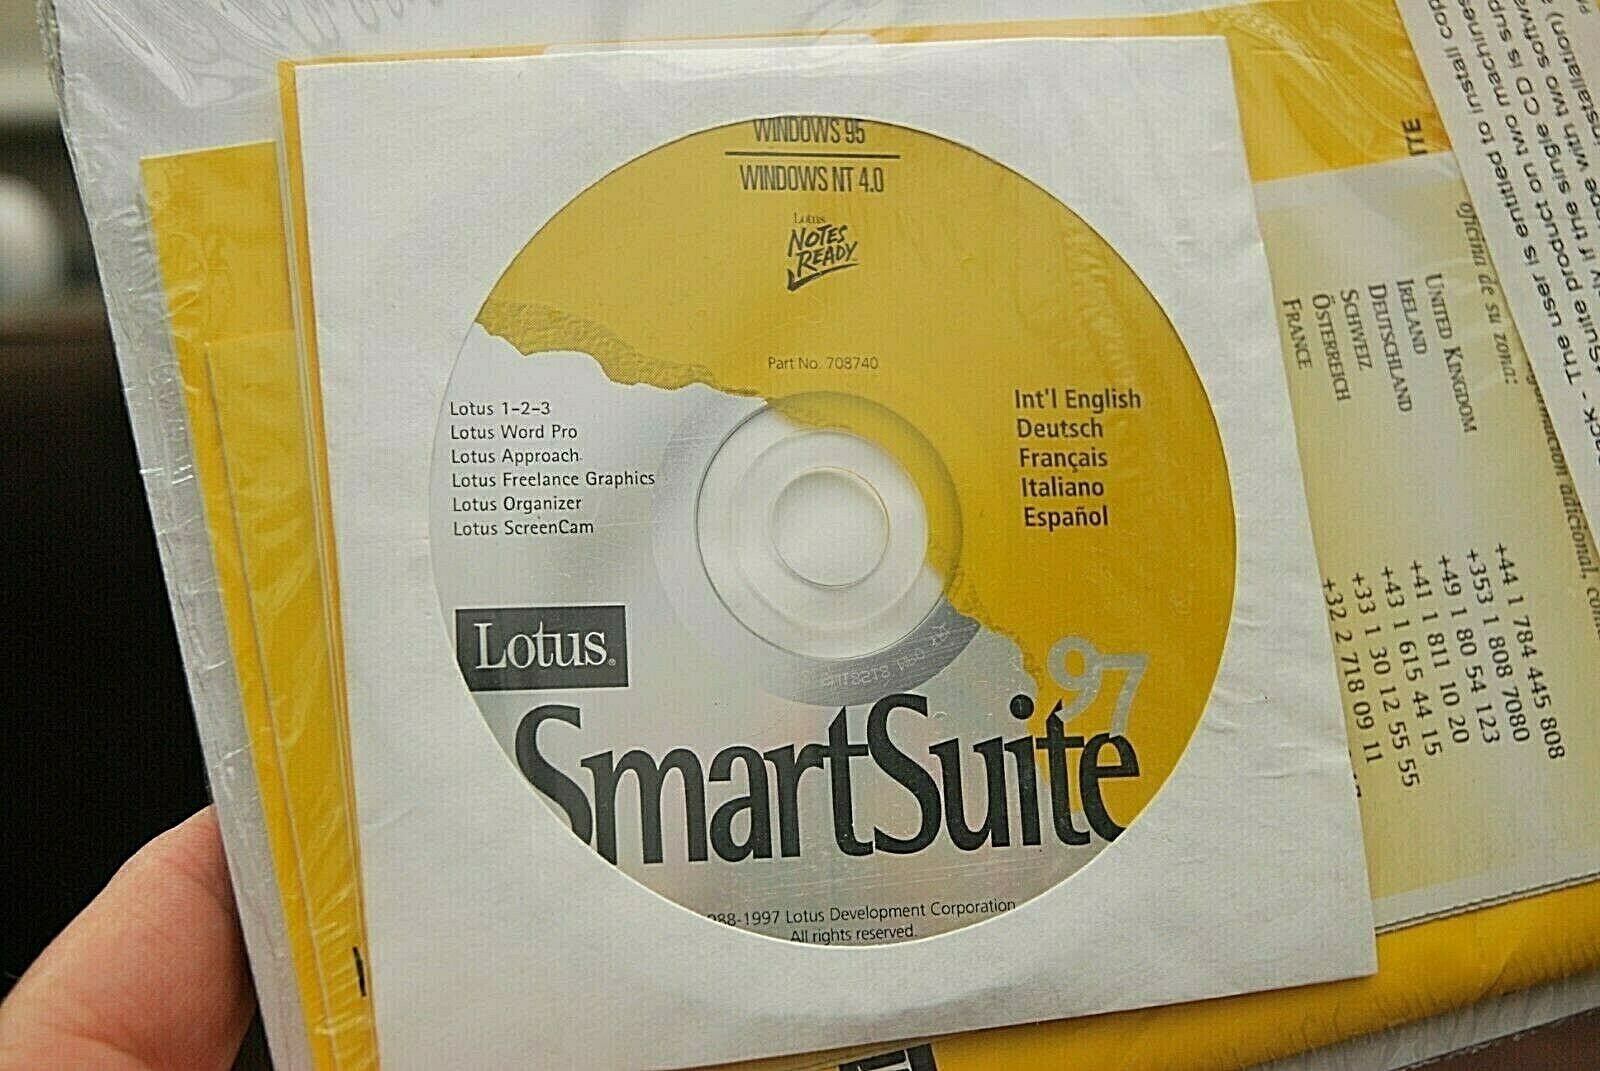 Lotus smartsuite 97 free download